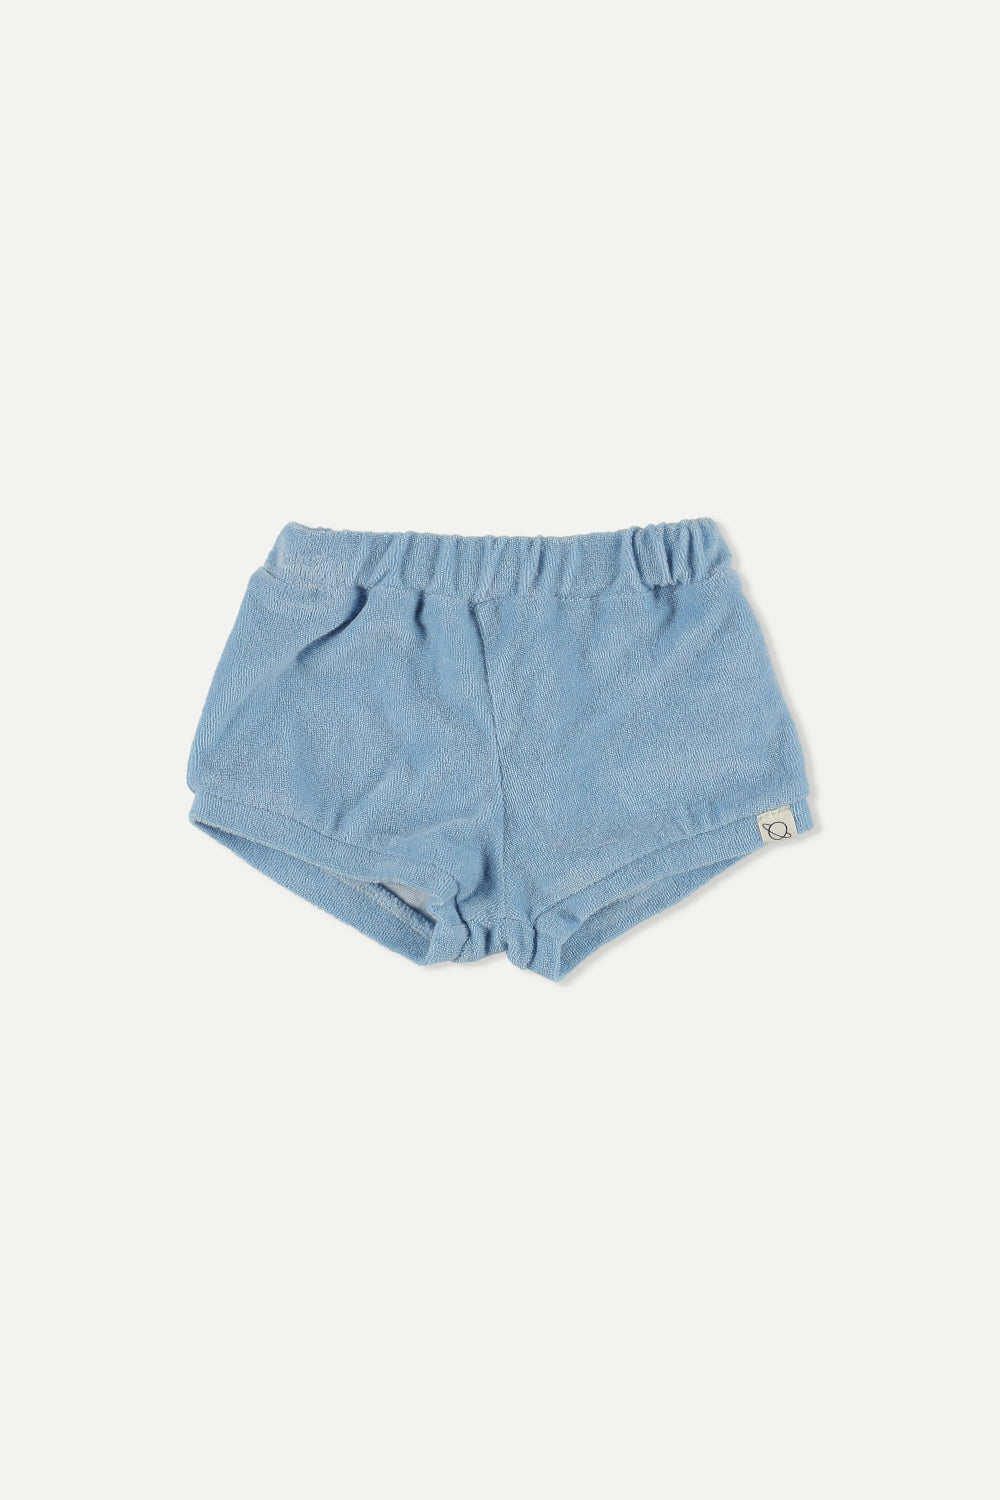 My little cozmo - conrad281 - terry shorts - blue